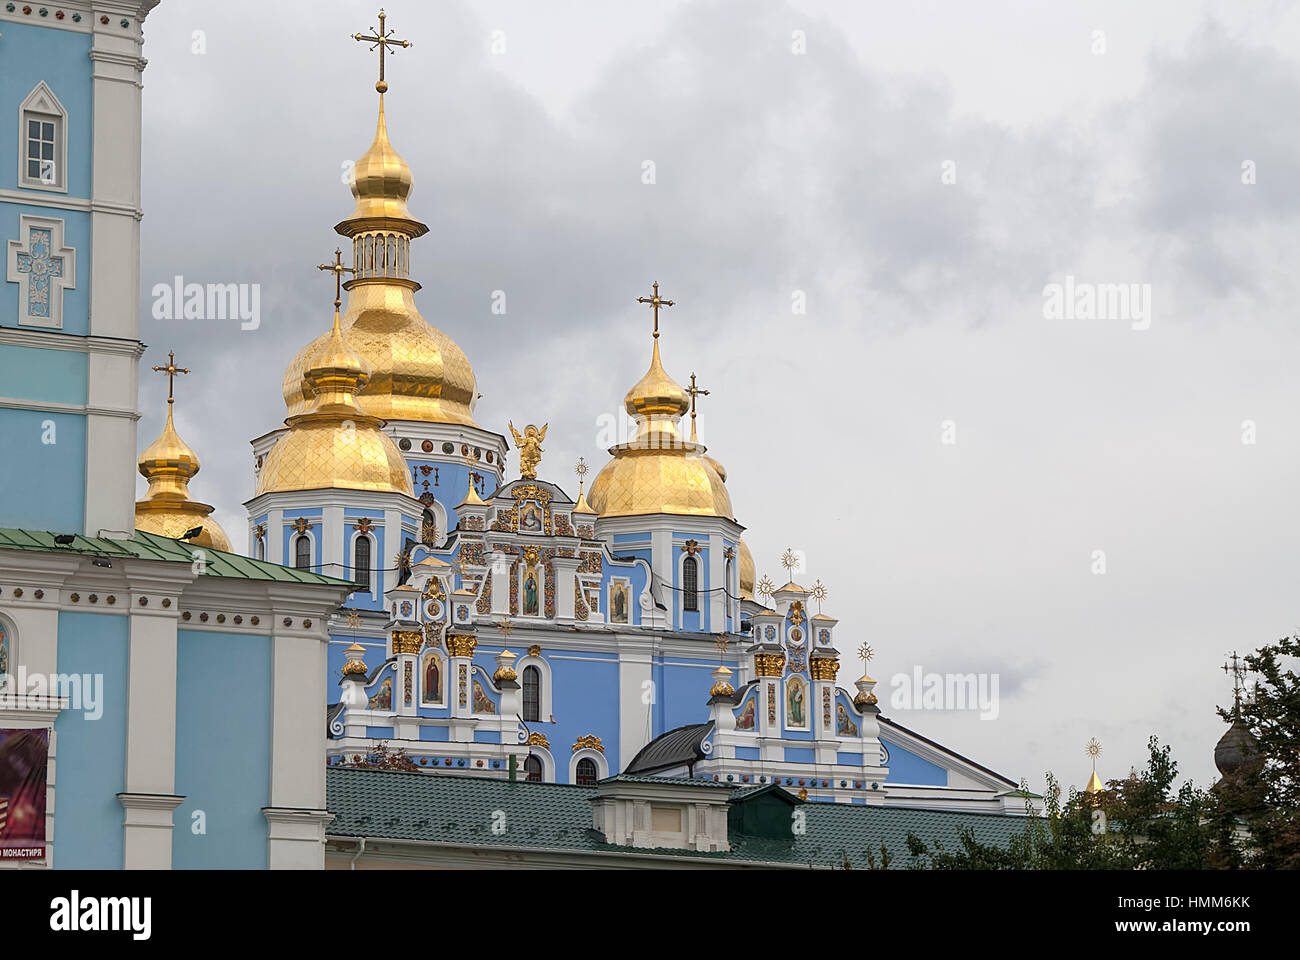 St. Michael's Golden - Domed Monastery in Kiev Stock Photo